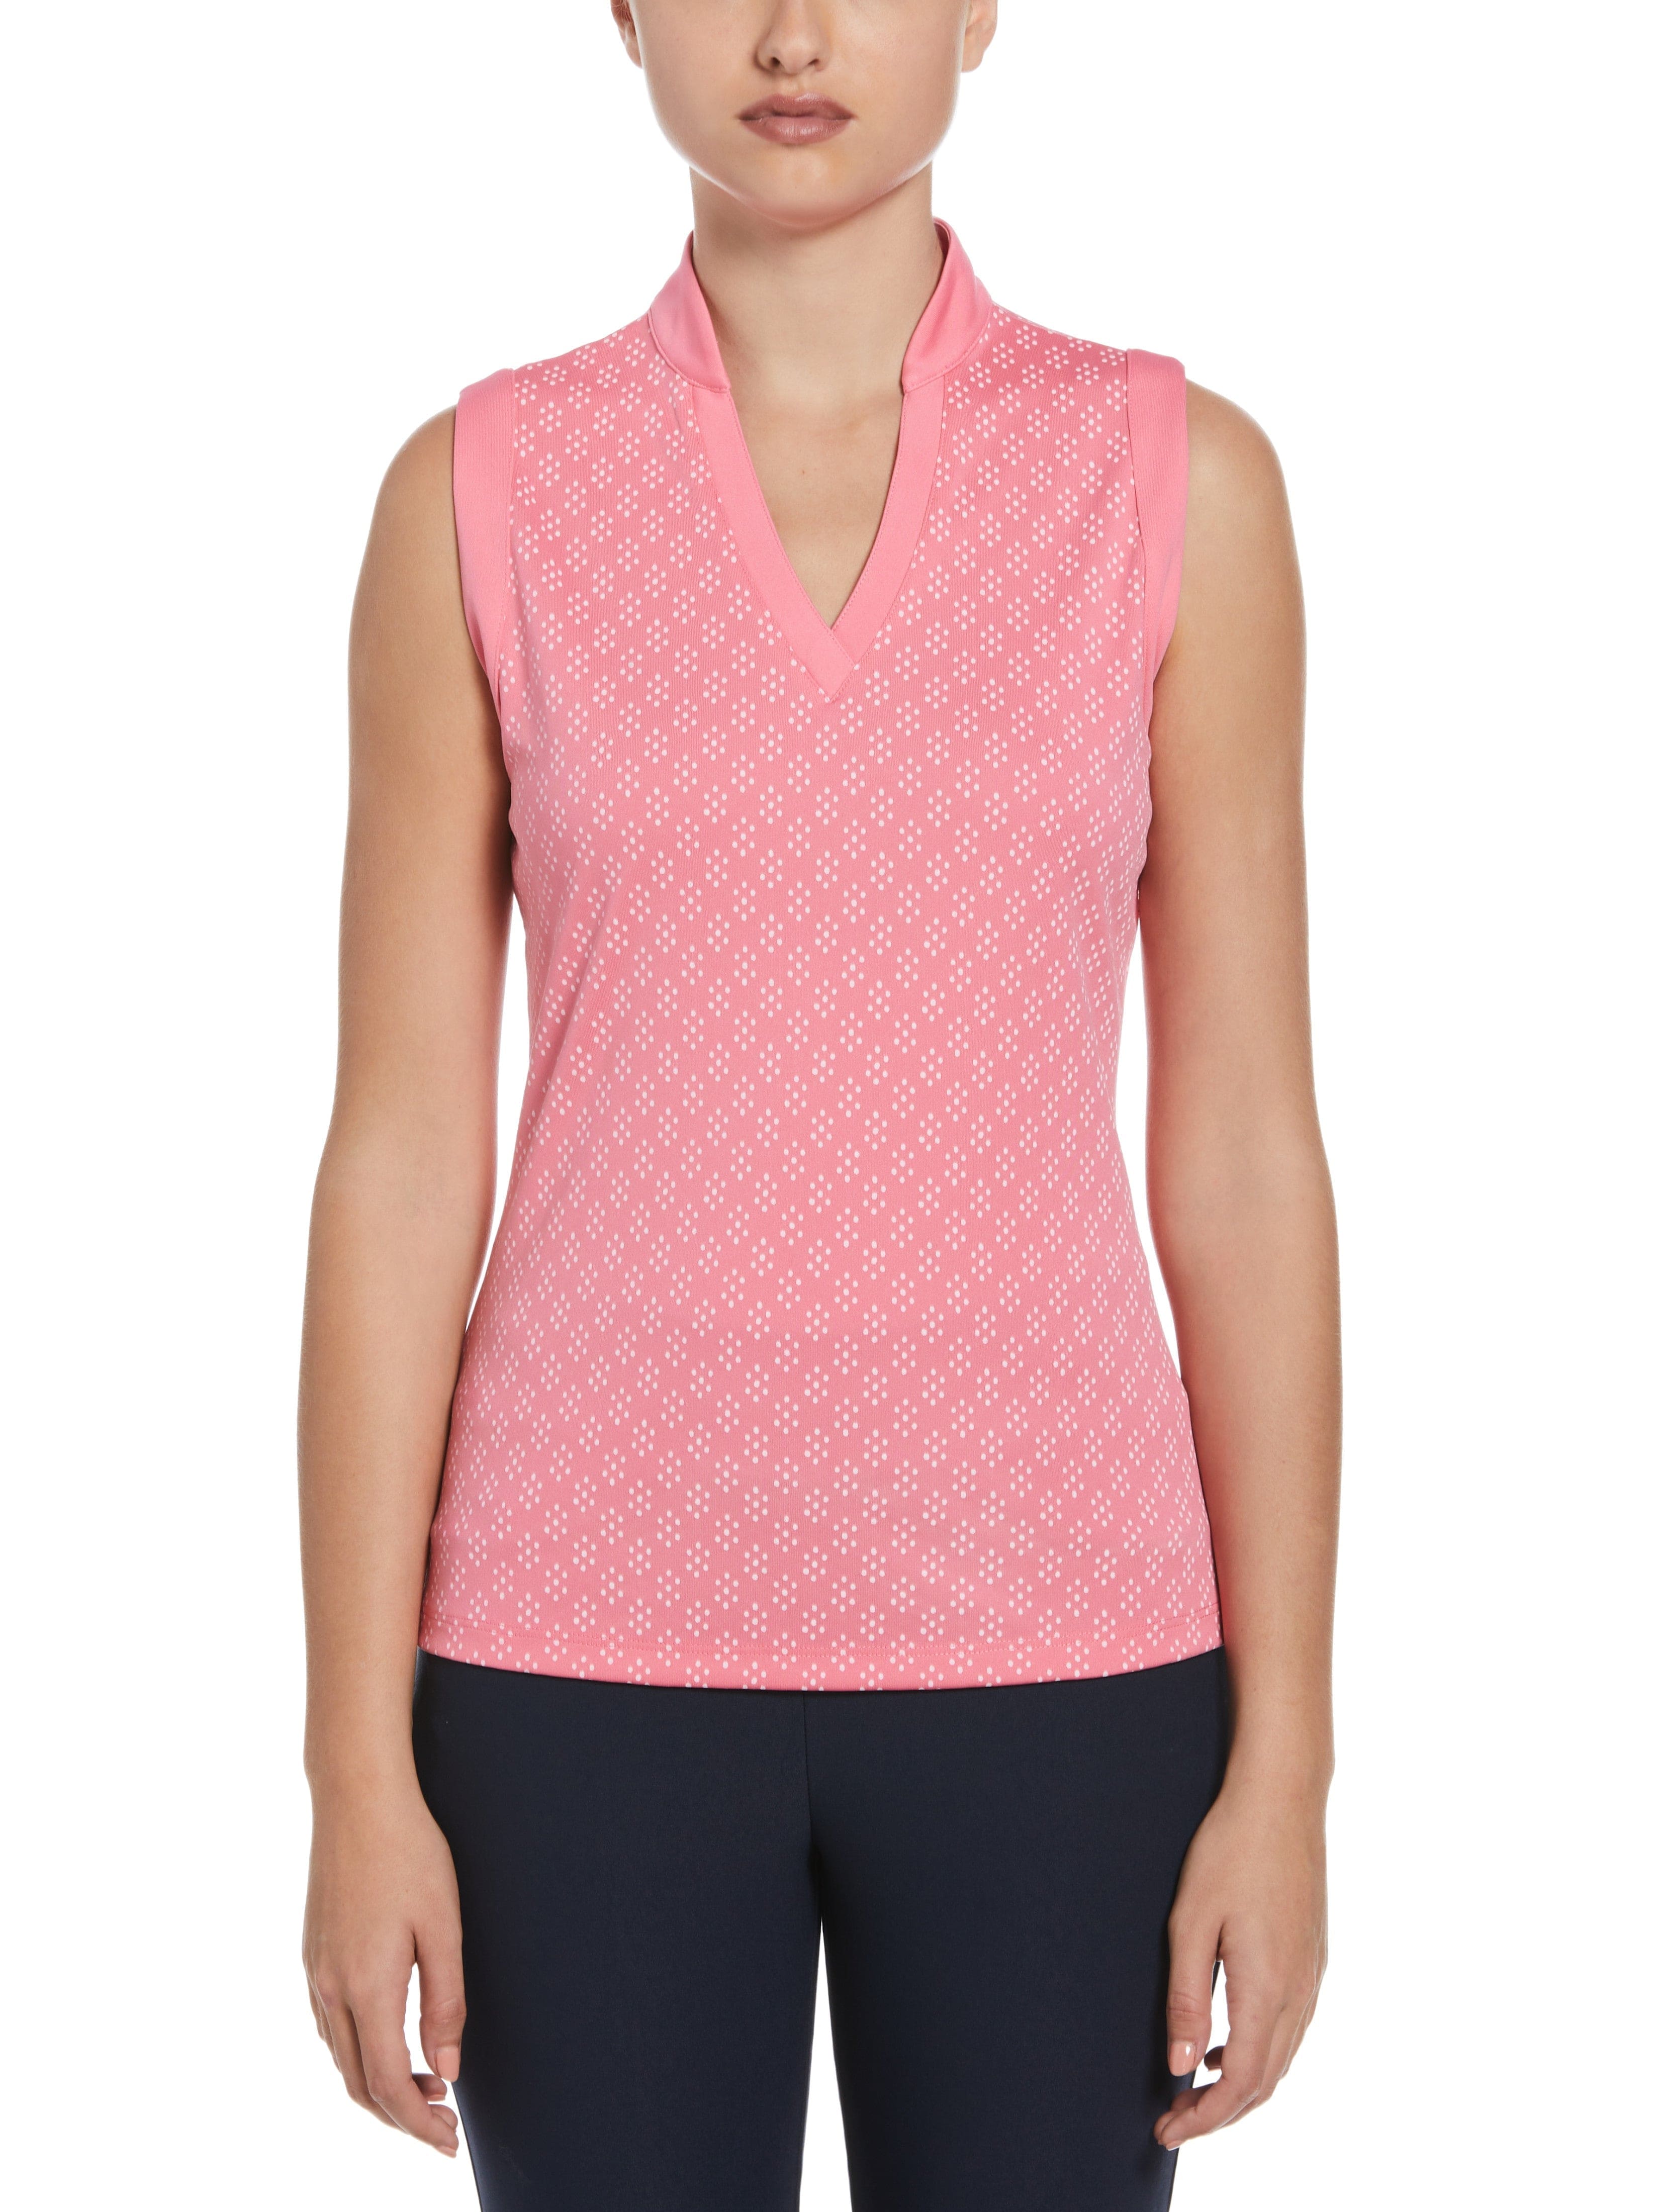 PGA TOUR Apparel Womens Geo Print Golf Shirt w/ Mandarin Collar, Size XS, Flowering Ginger Pink, 100% Polyester | Golf Apparel Shop